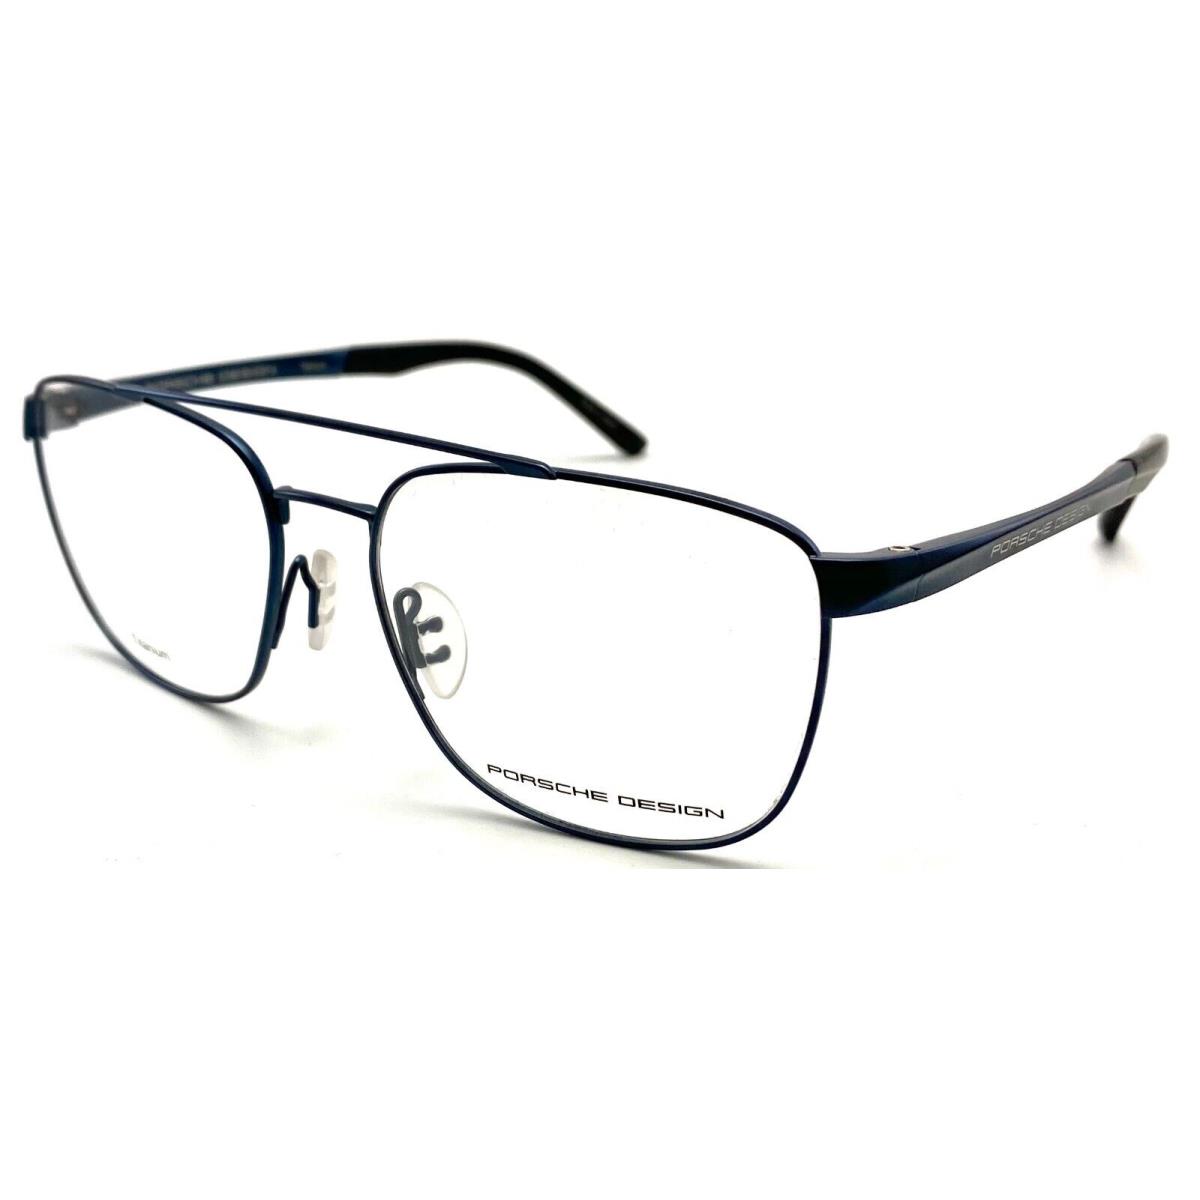 Porsche Design P`8370 D Blue Eyeglasses Frame 56-17 140 W/case